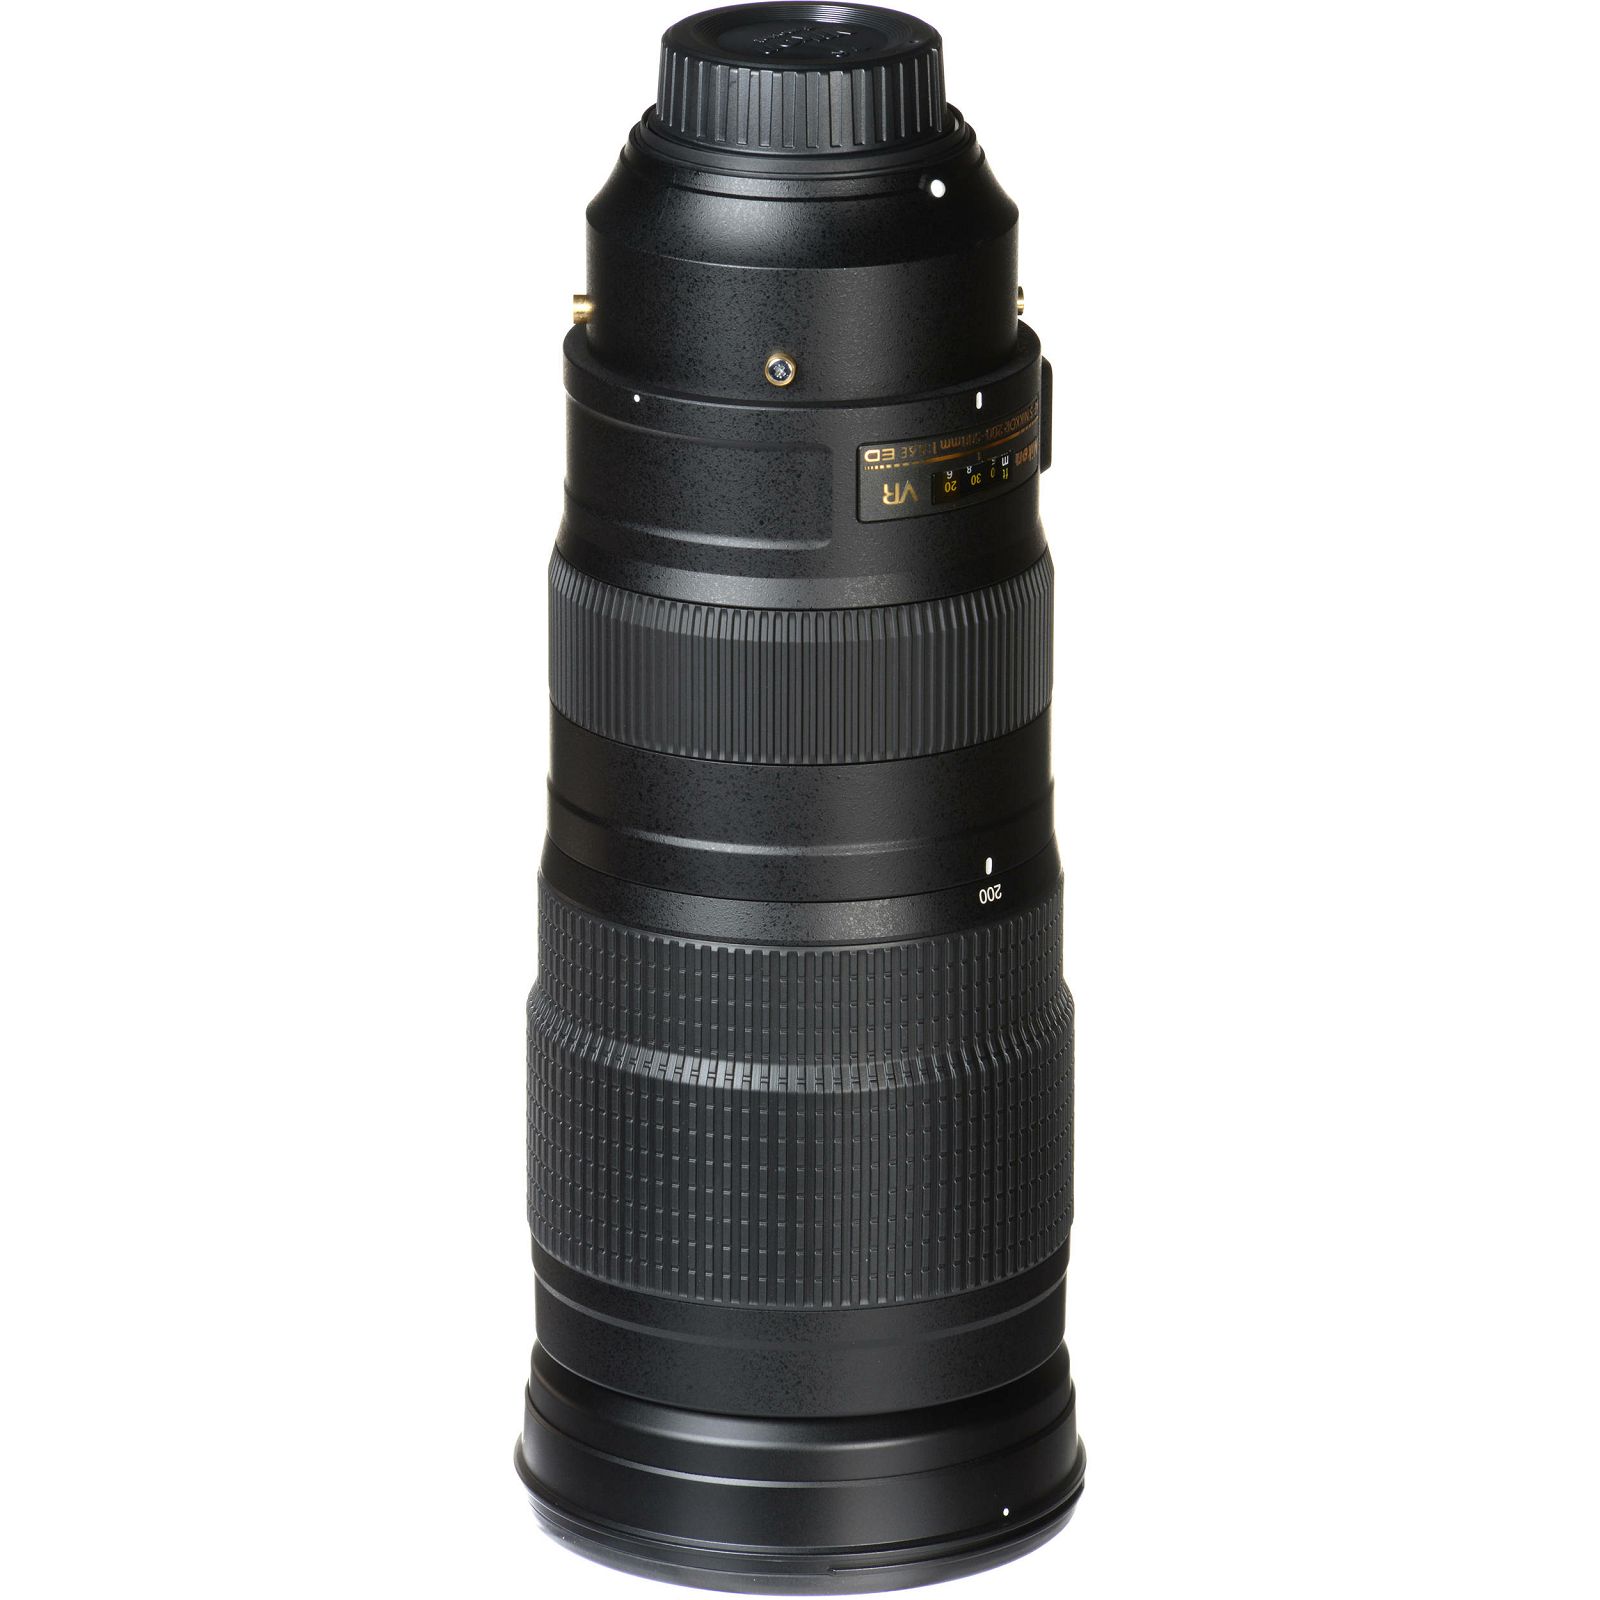 Nikon AF-S 200-500mm f/5.6E ED VR FX telefoto objektiv Nikkor auto focus zoom lens 200-500 f/5.6 f5.6 E f5.6E (JAA822DA)